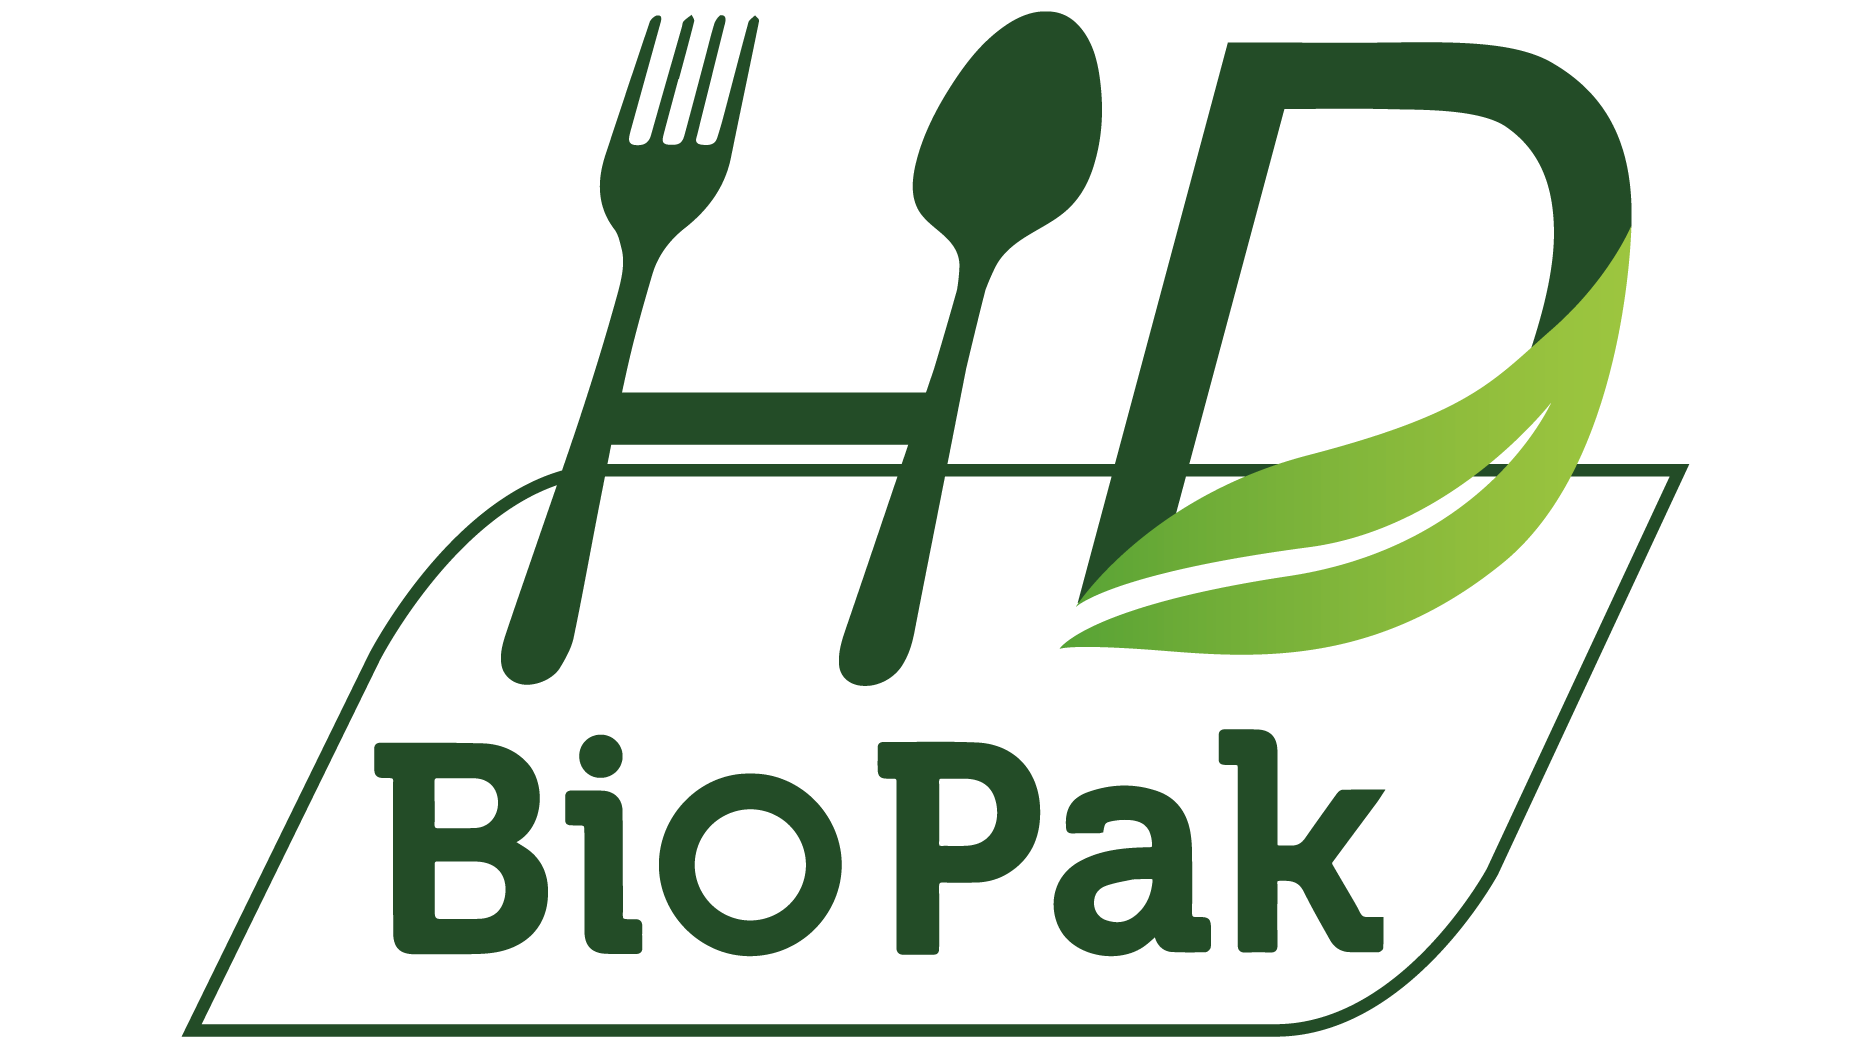 32B  32oz Eco-friendly Kraft Paper Soup/Hot Food Cup- 500 Pcs – HD Bio  Packaging